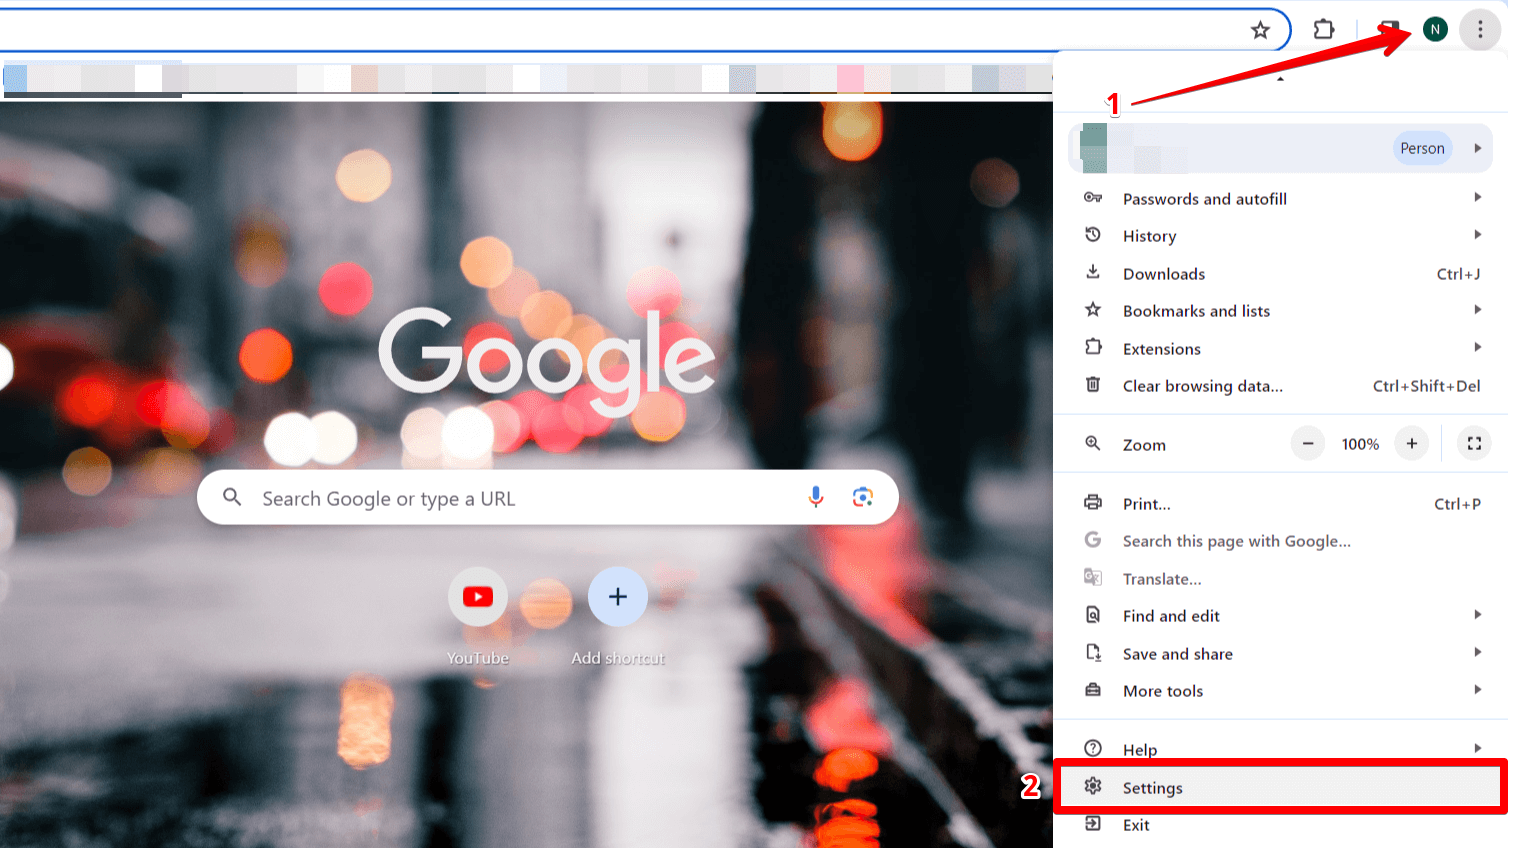 "Settings" highlighted in Chrome menu.